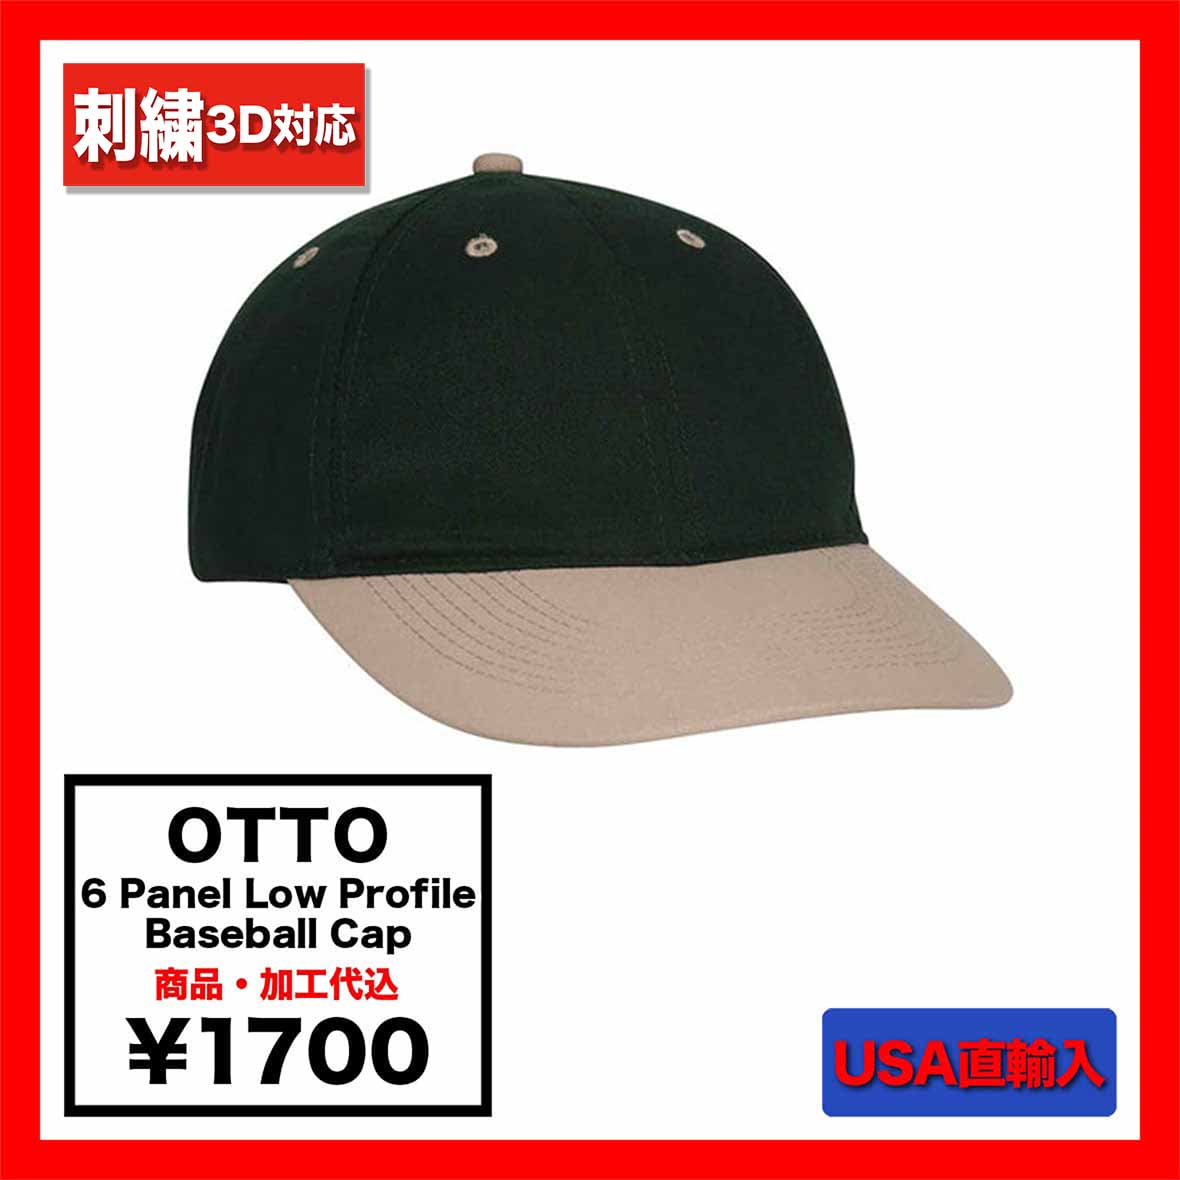 OTTO オットー 6 Panel Low Profile Baseball Cap (品番25-023US)